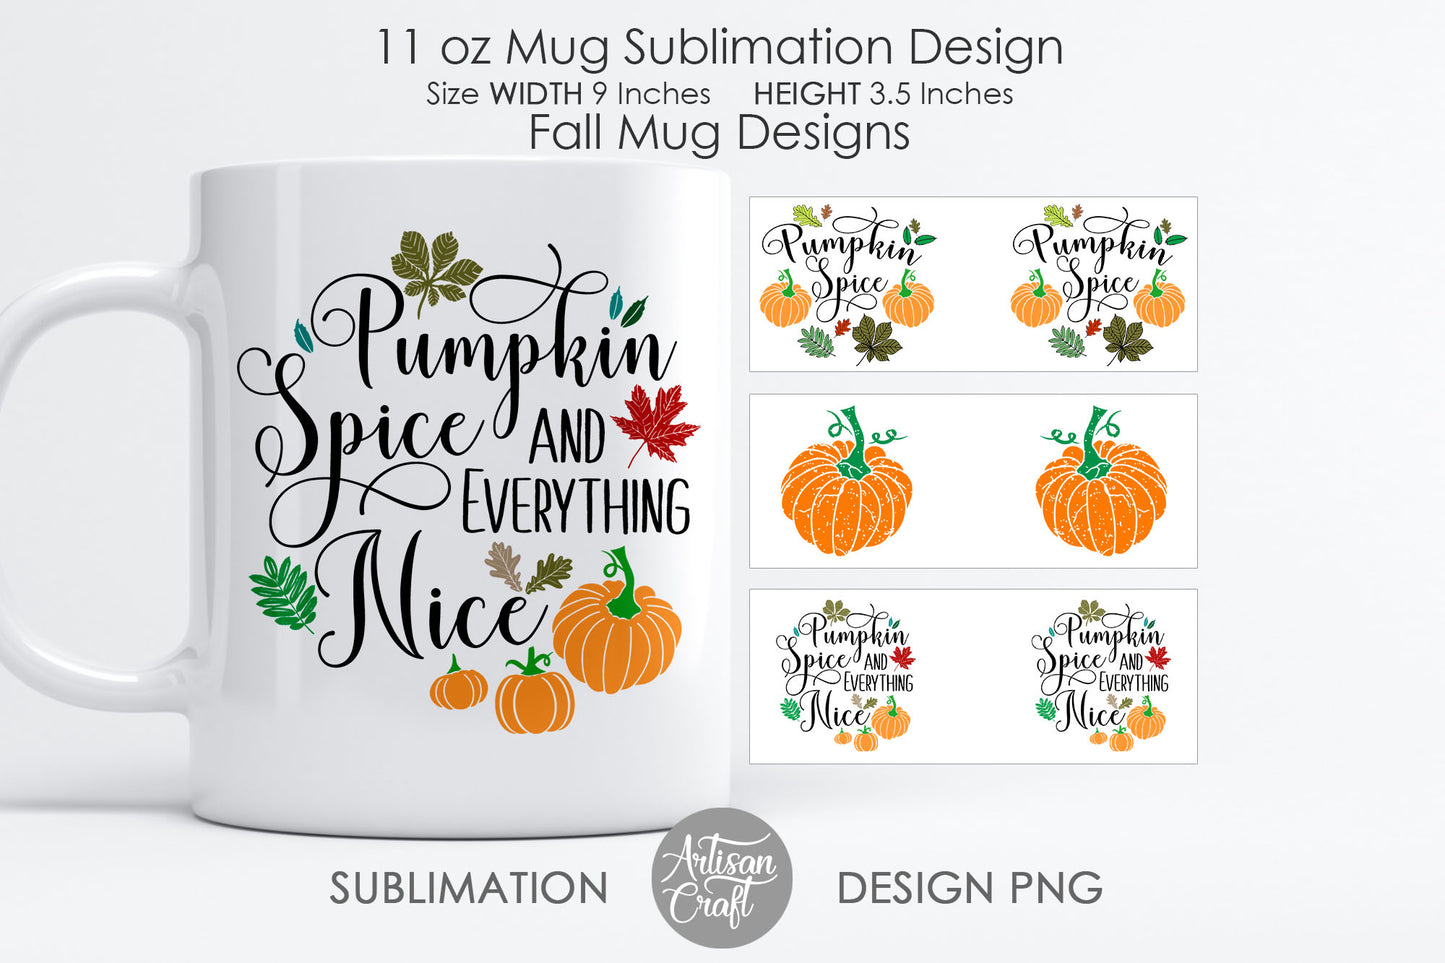 Fall mug designs